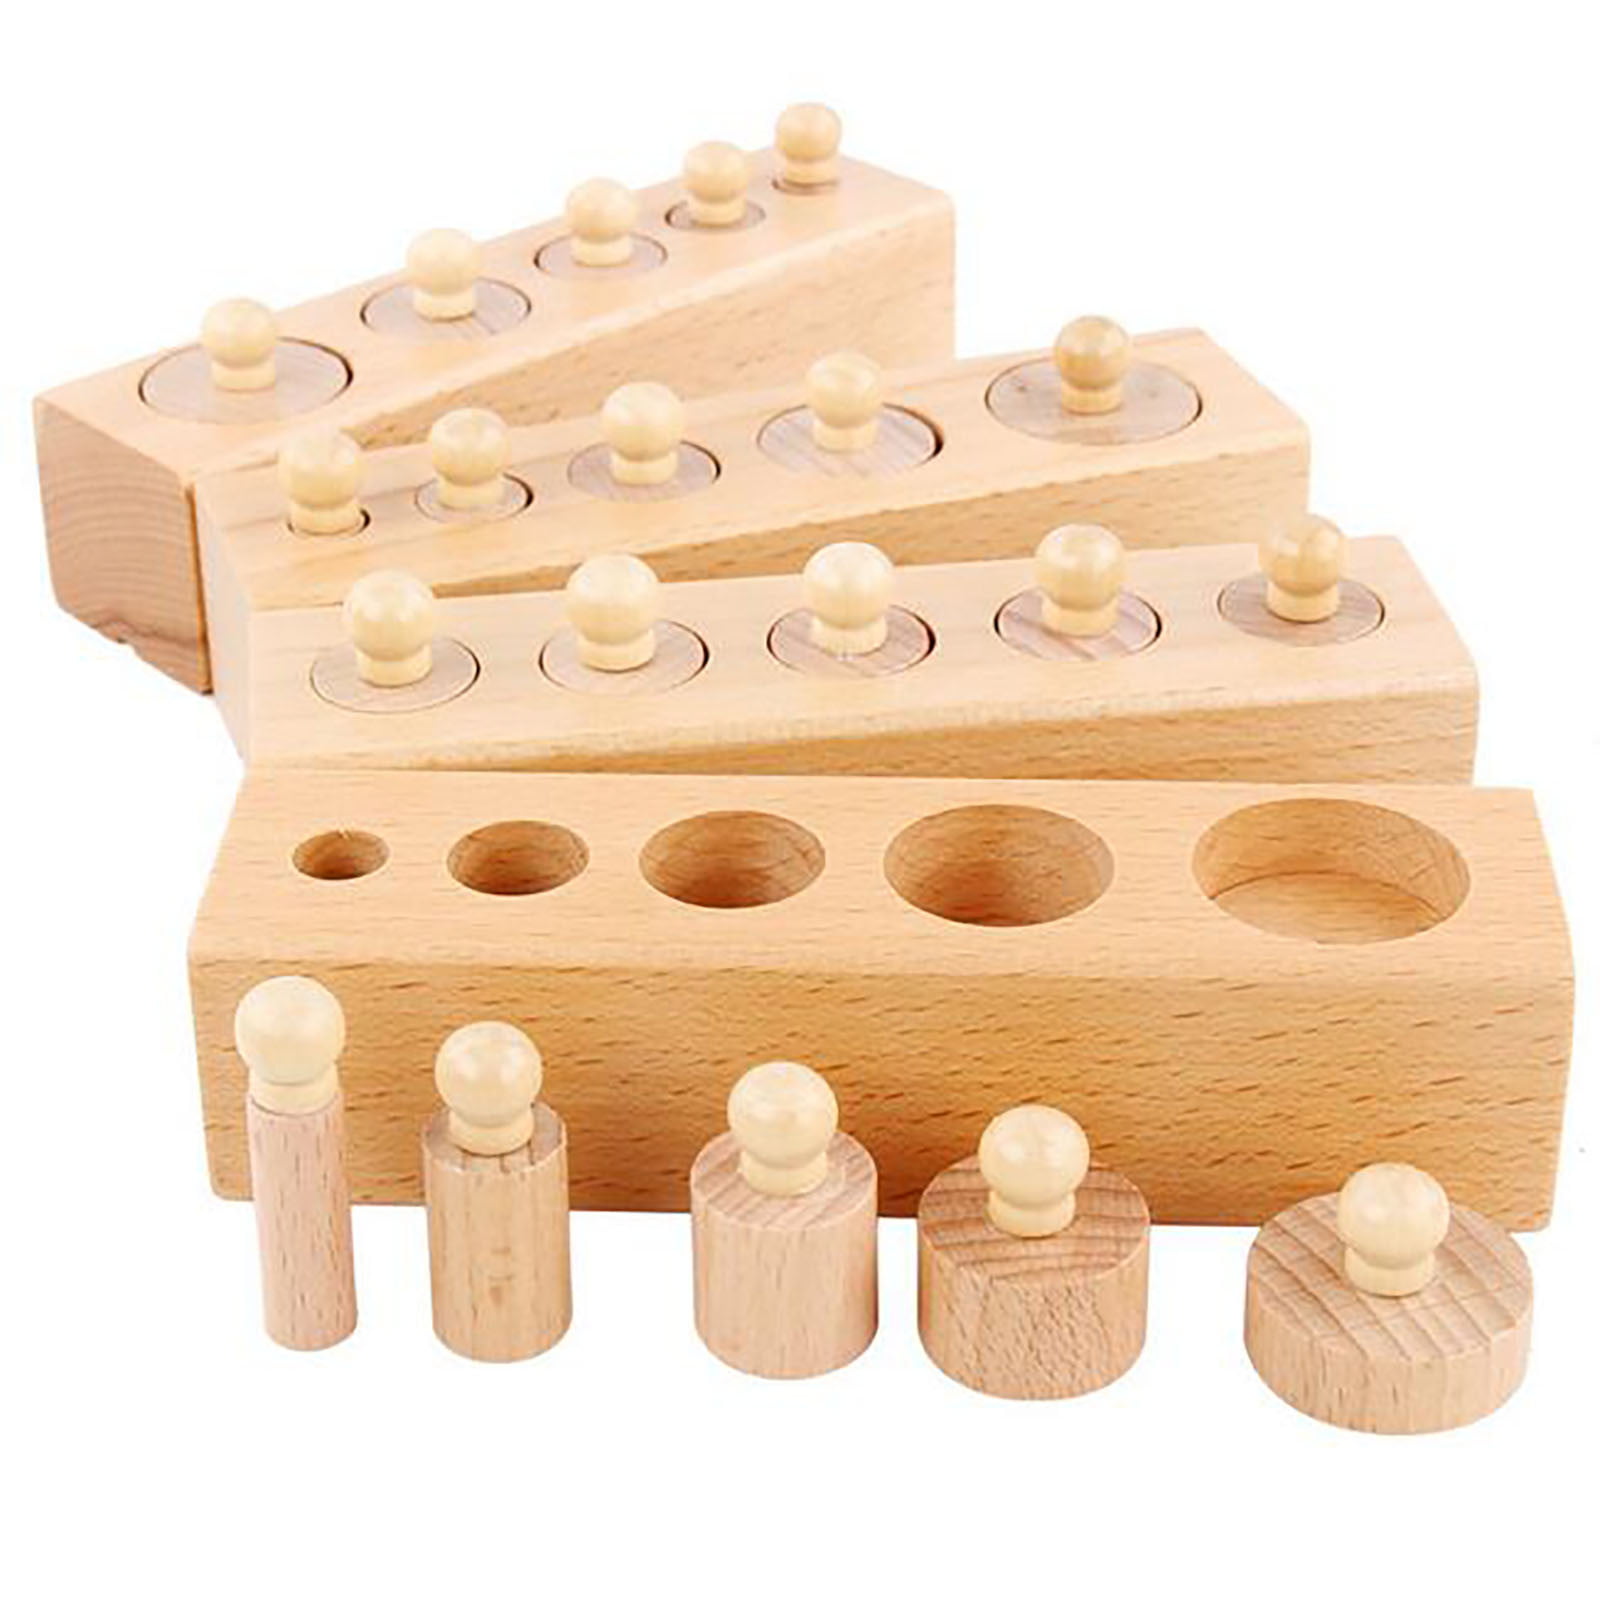 Mini knobbed cylinders wooden toys montessori mathematics 